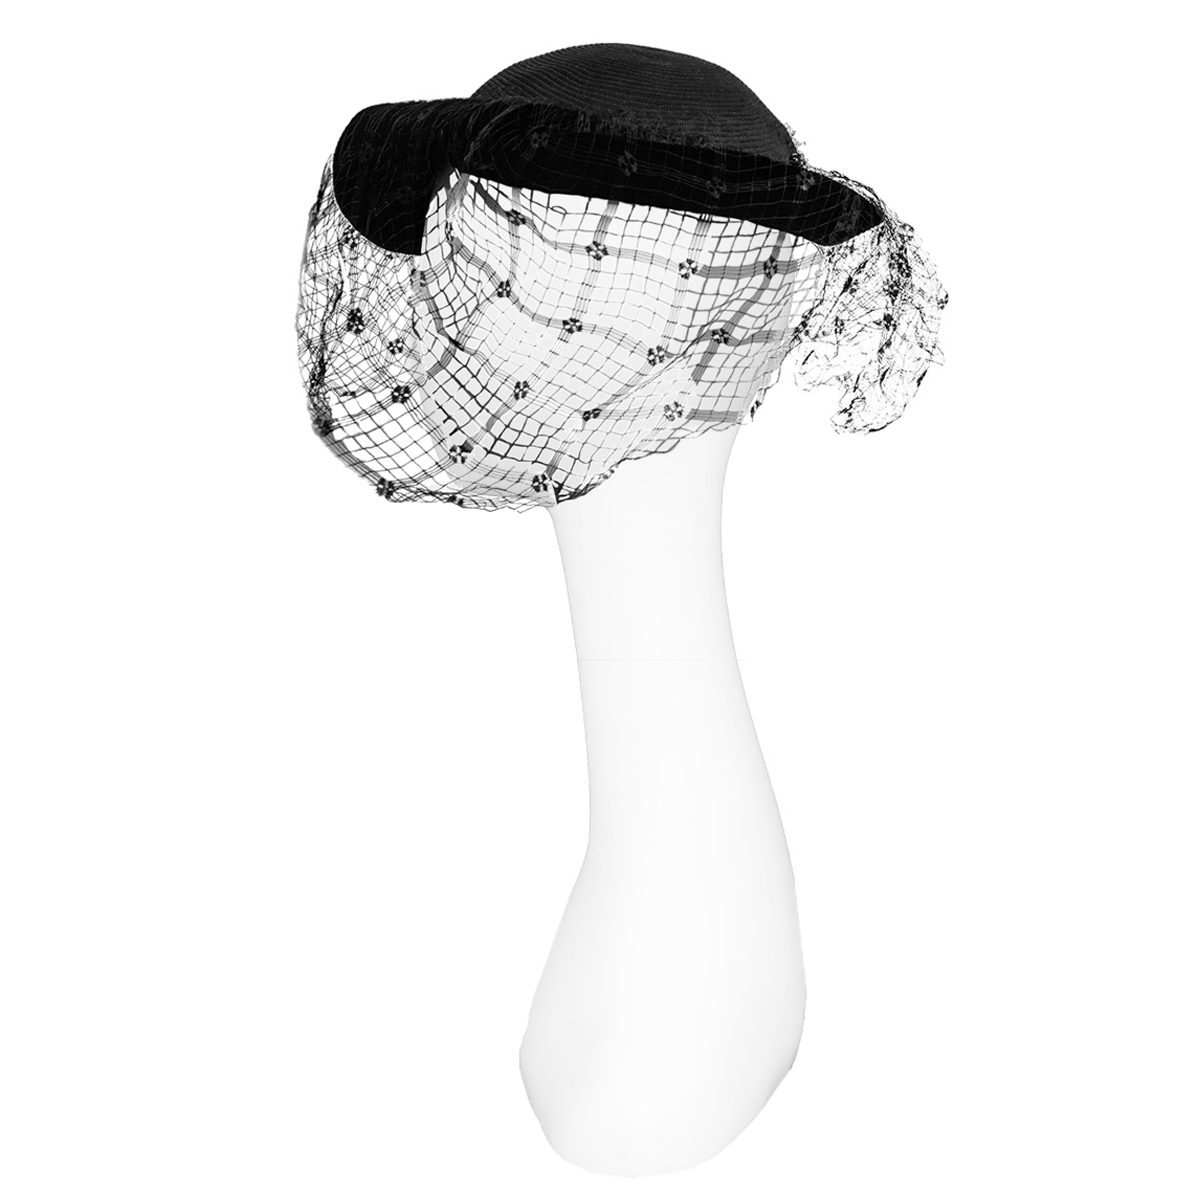 Vintage hat with veil